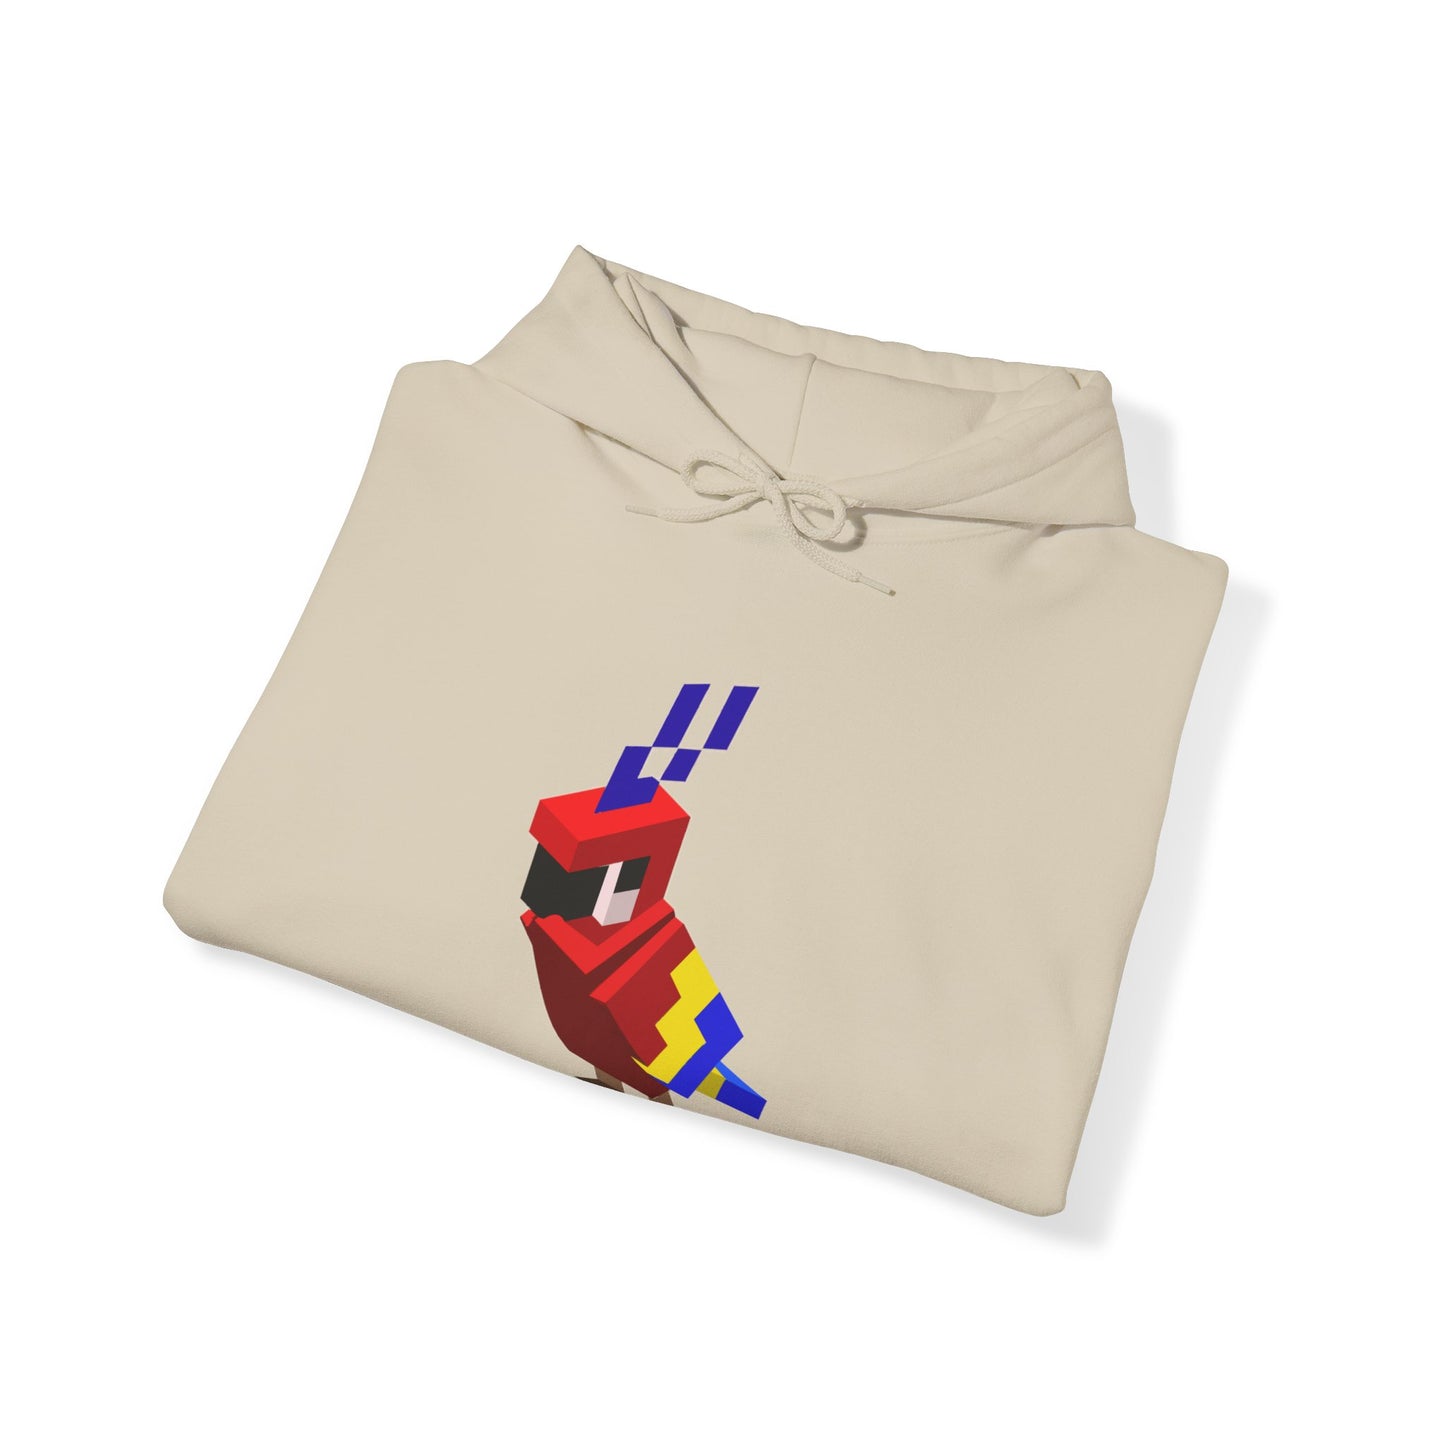 Arcade Parrot Hooded Sweatshirt